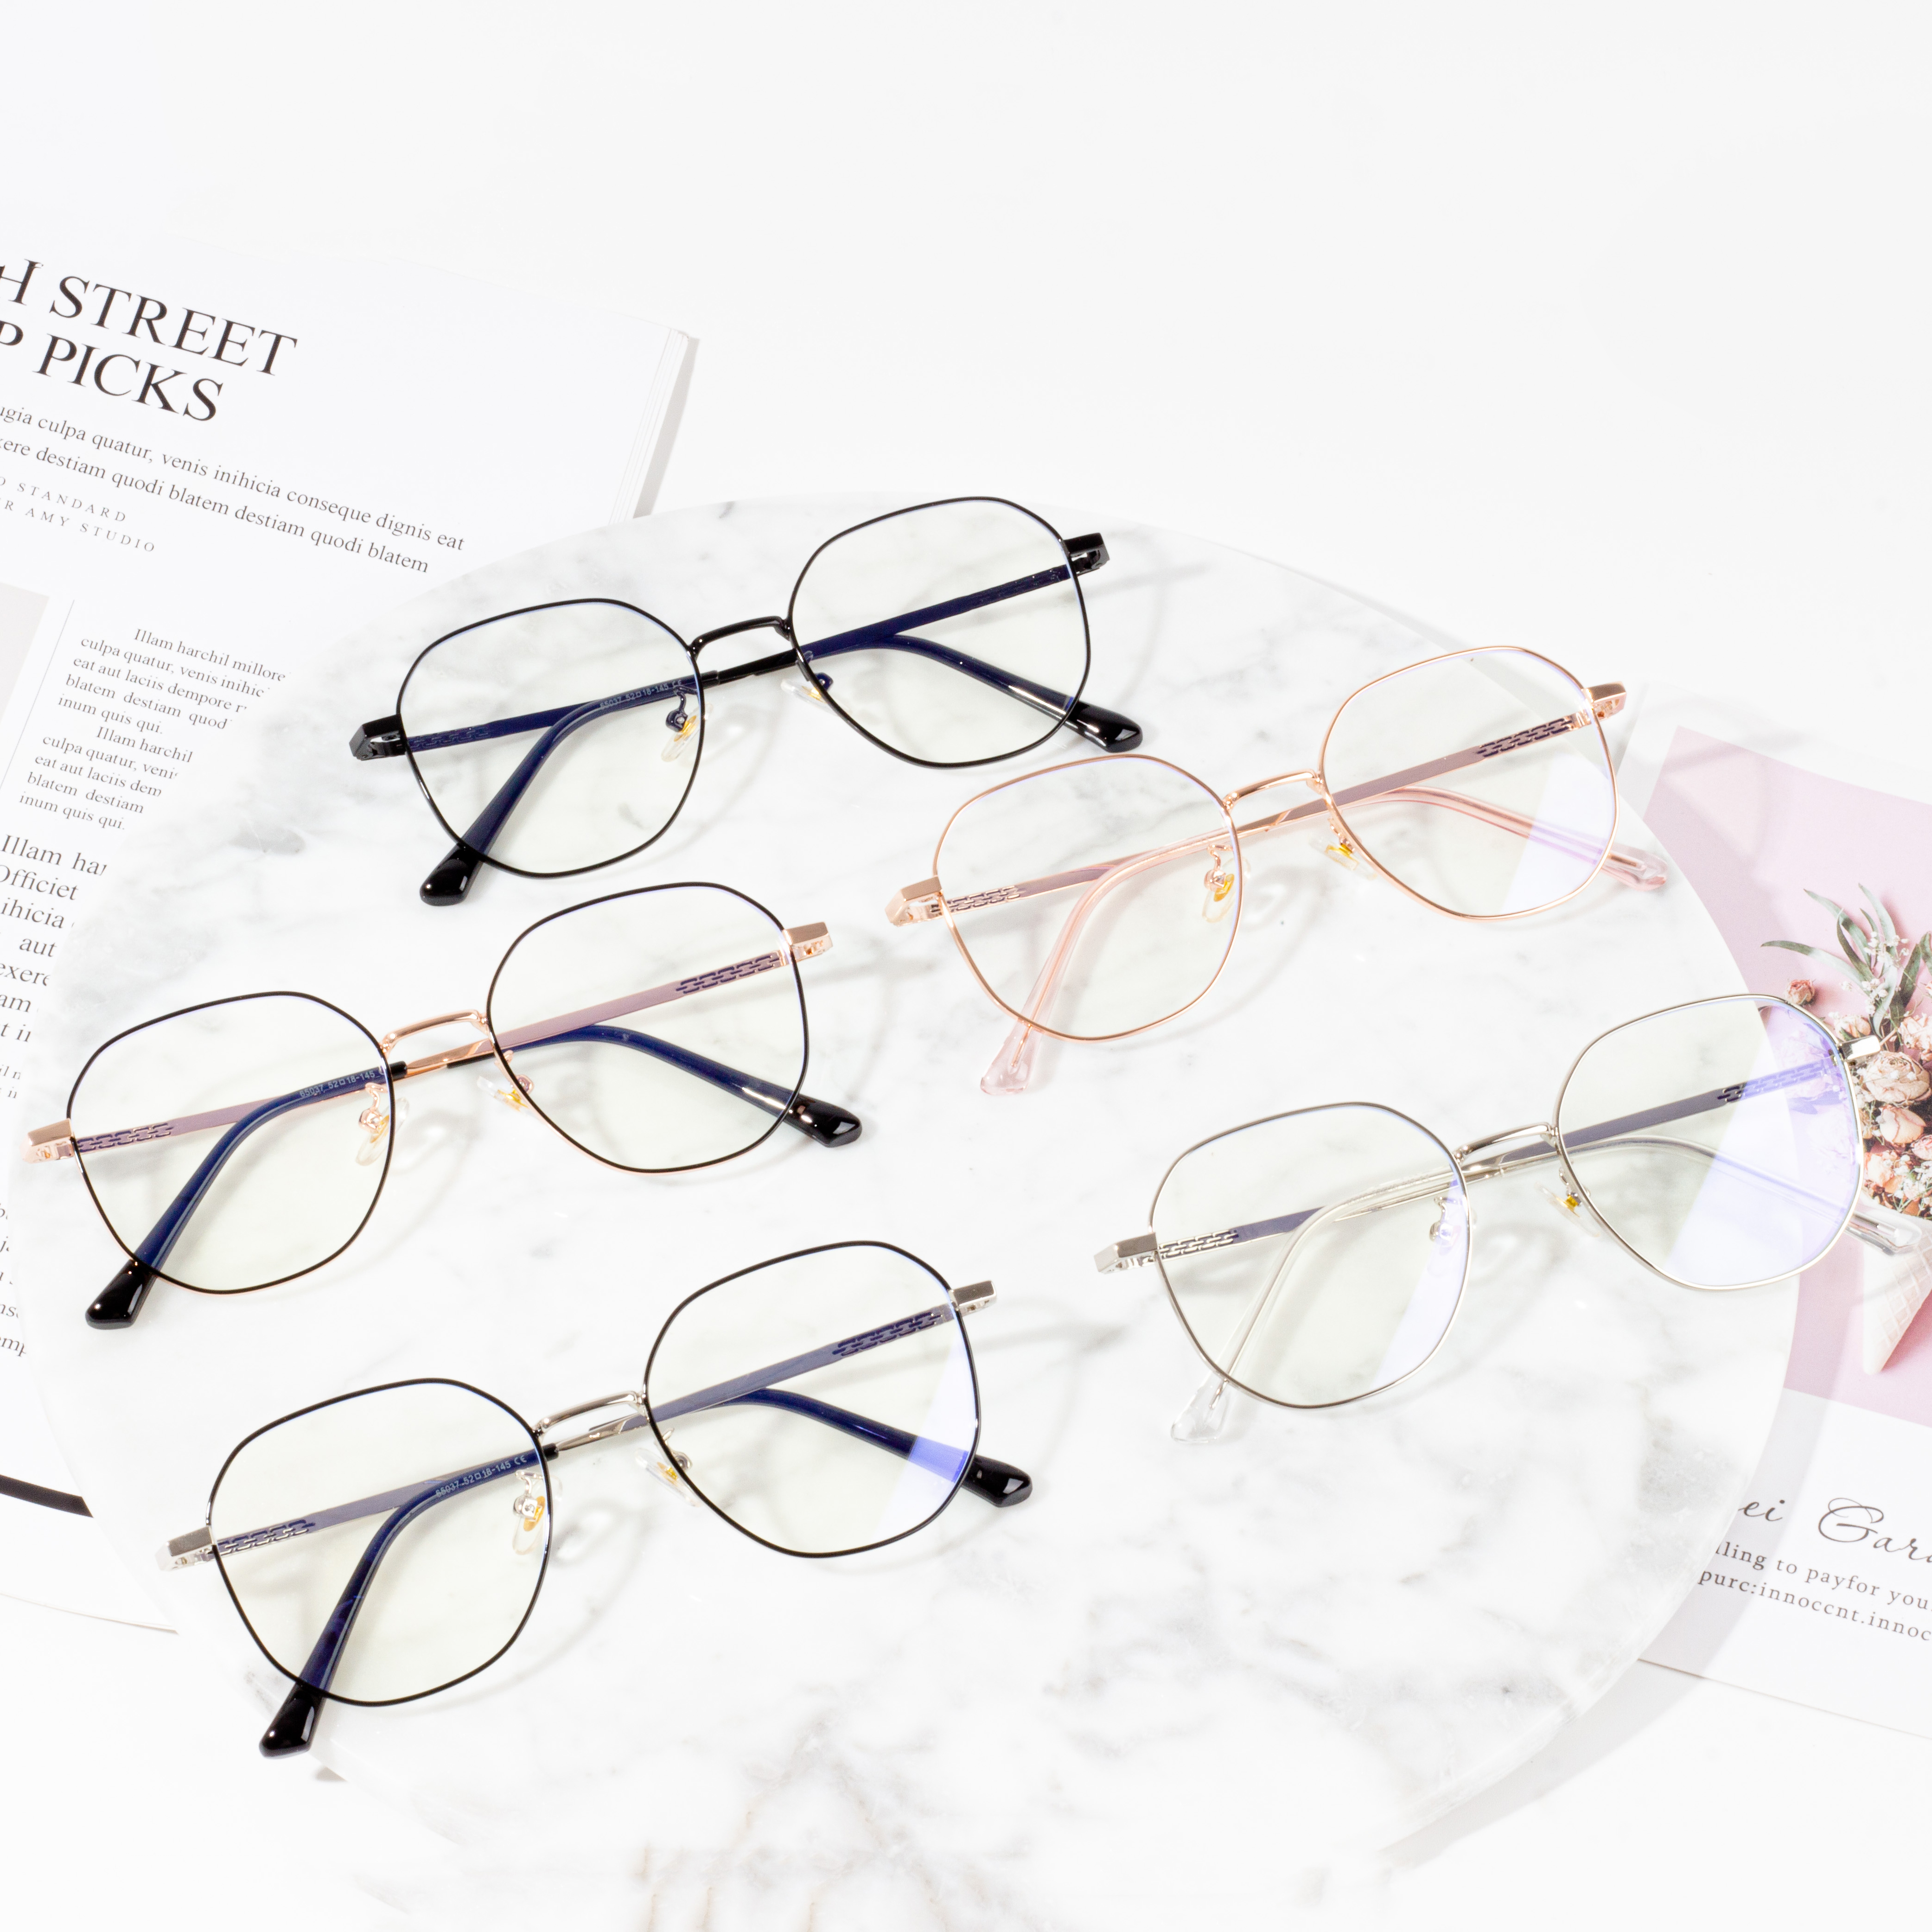 frames direct eyeglasses